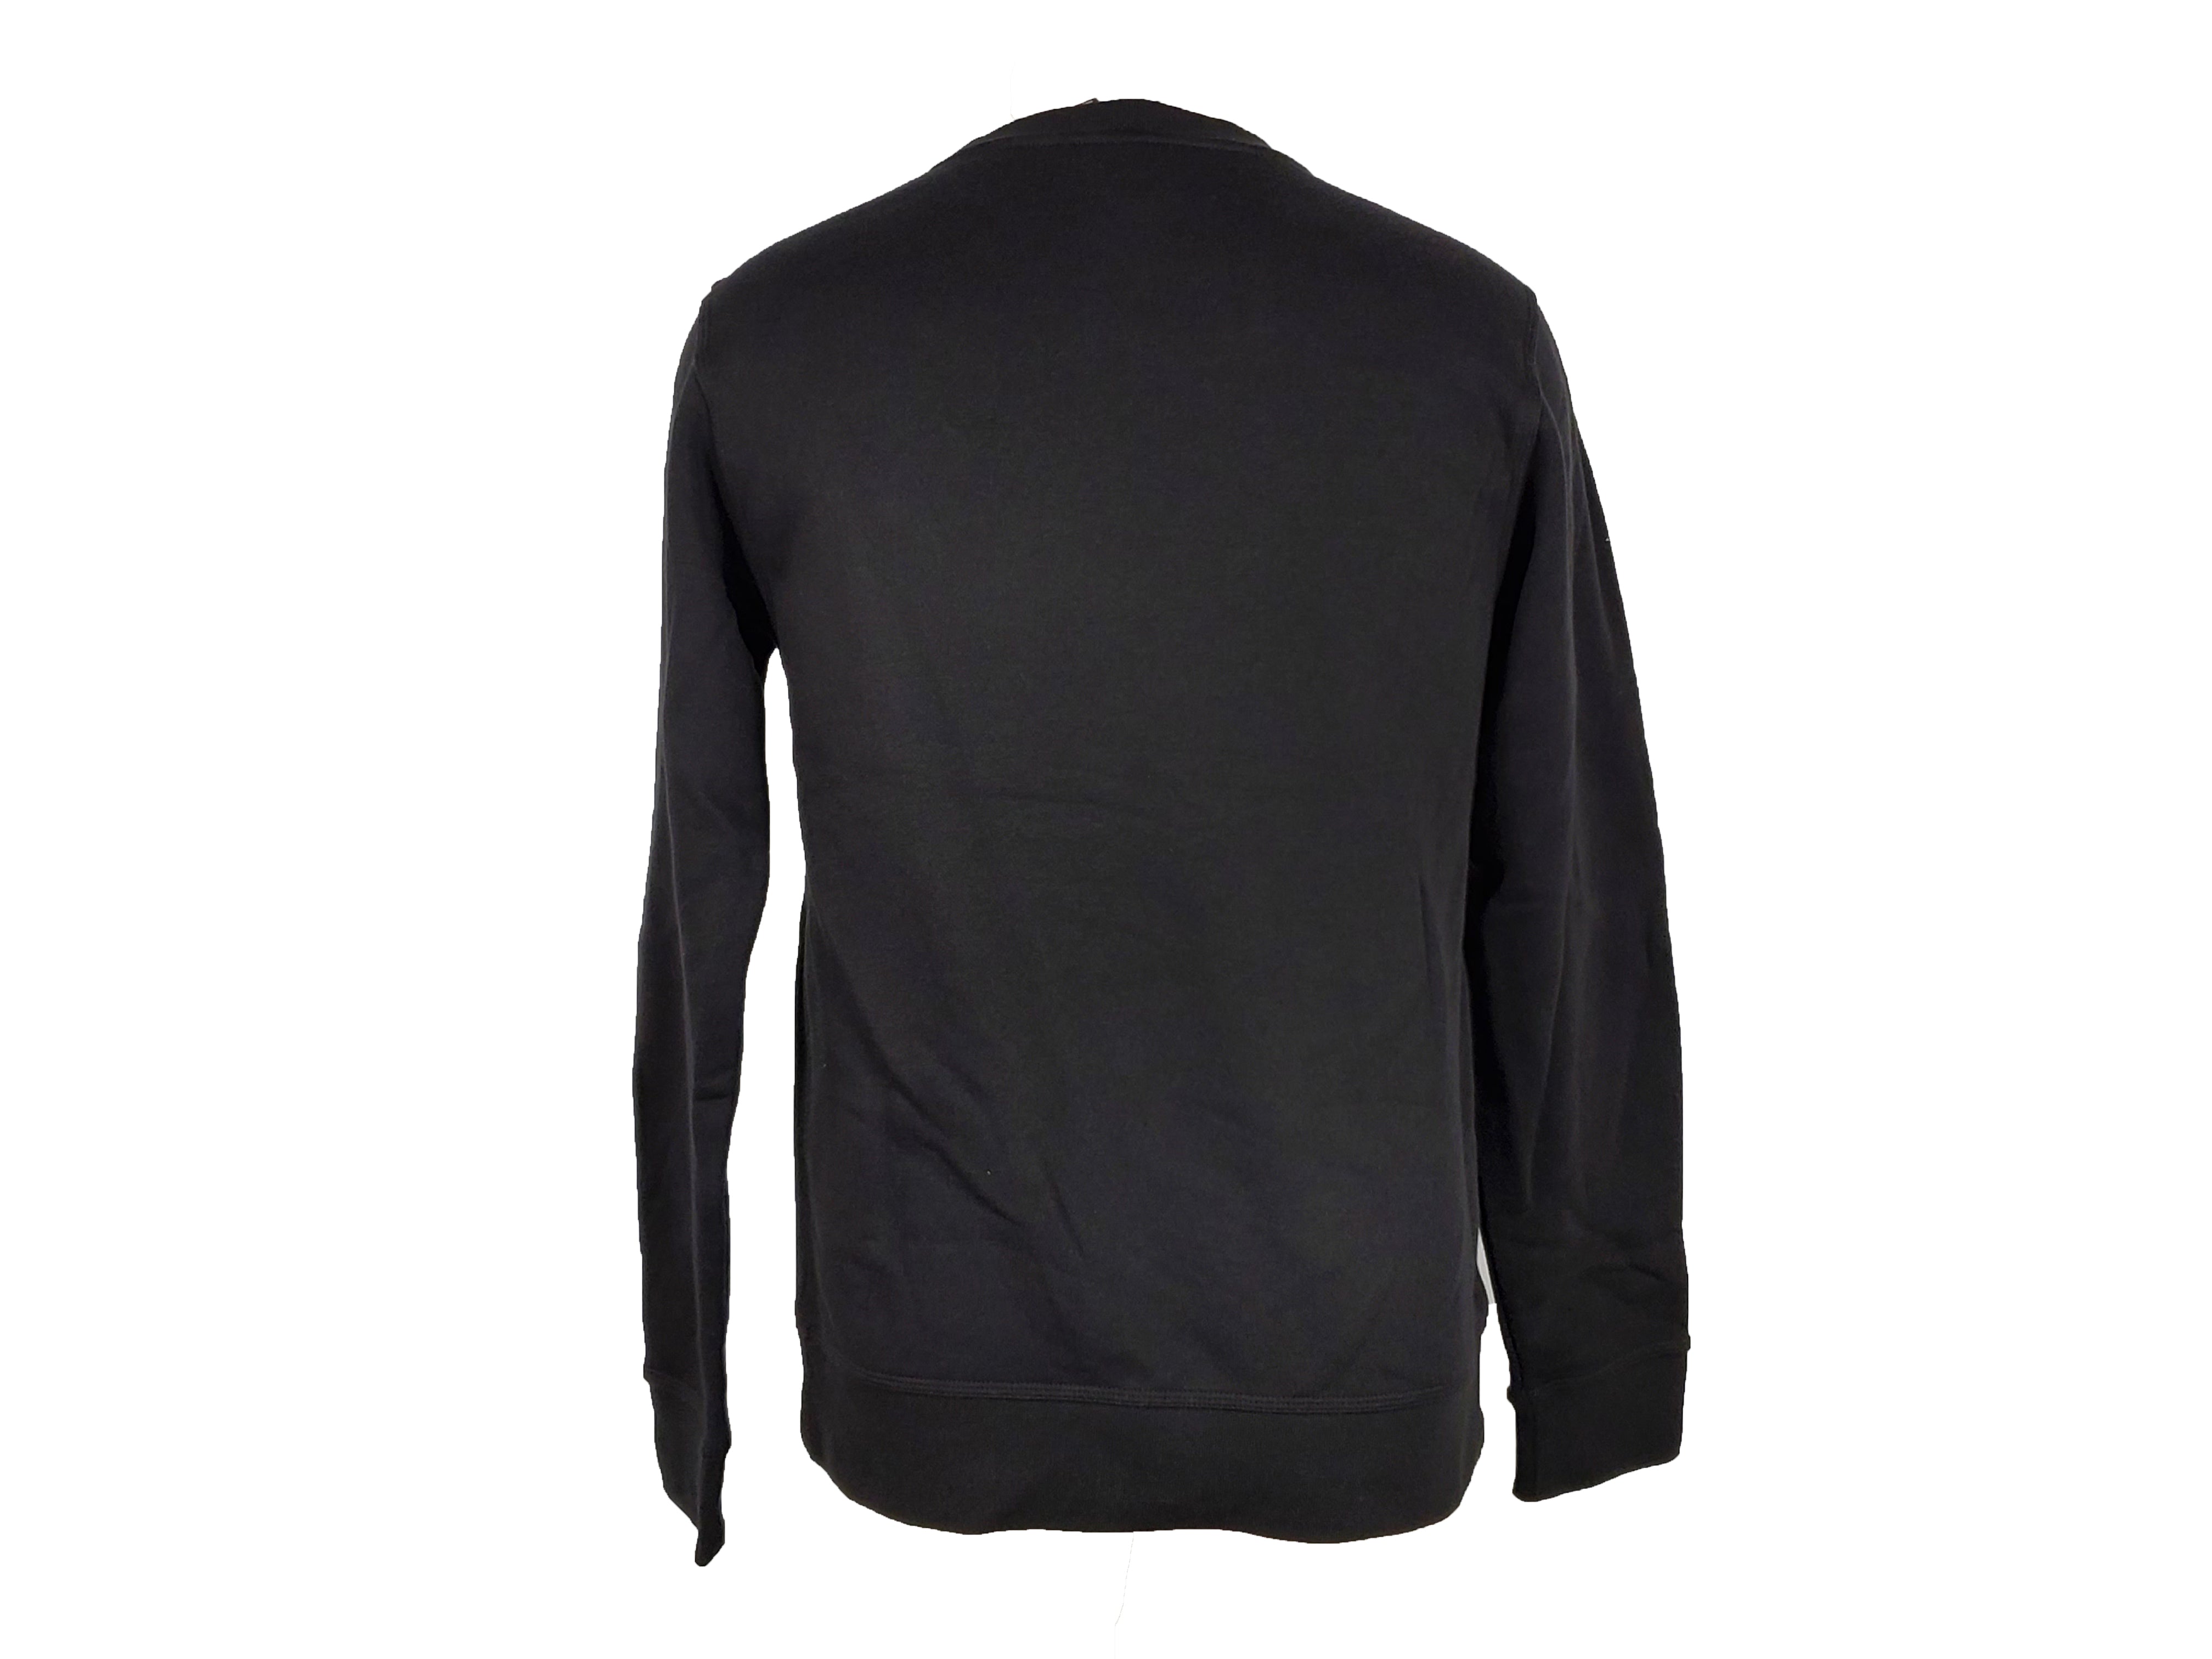 Nike Men's Sweatshirt - Black - S